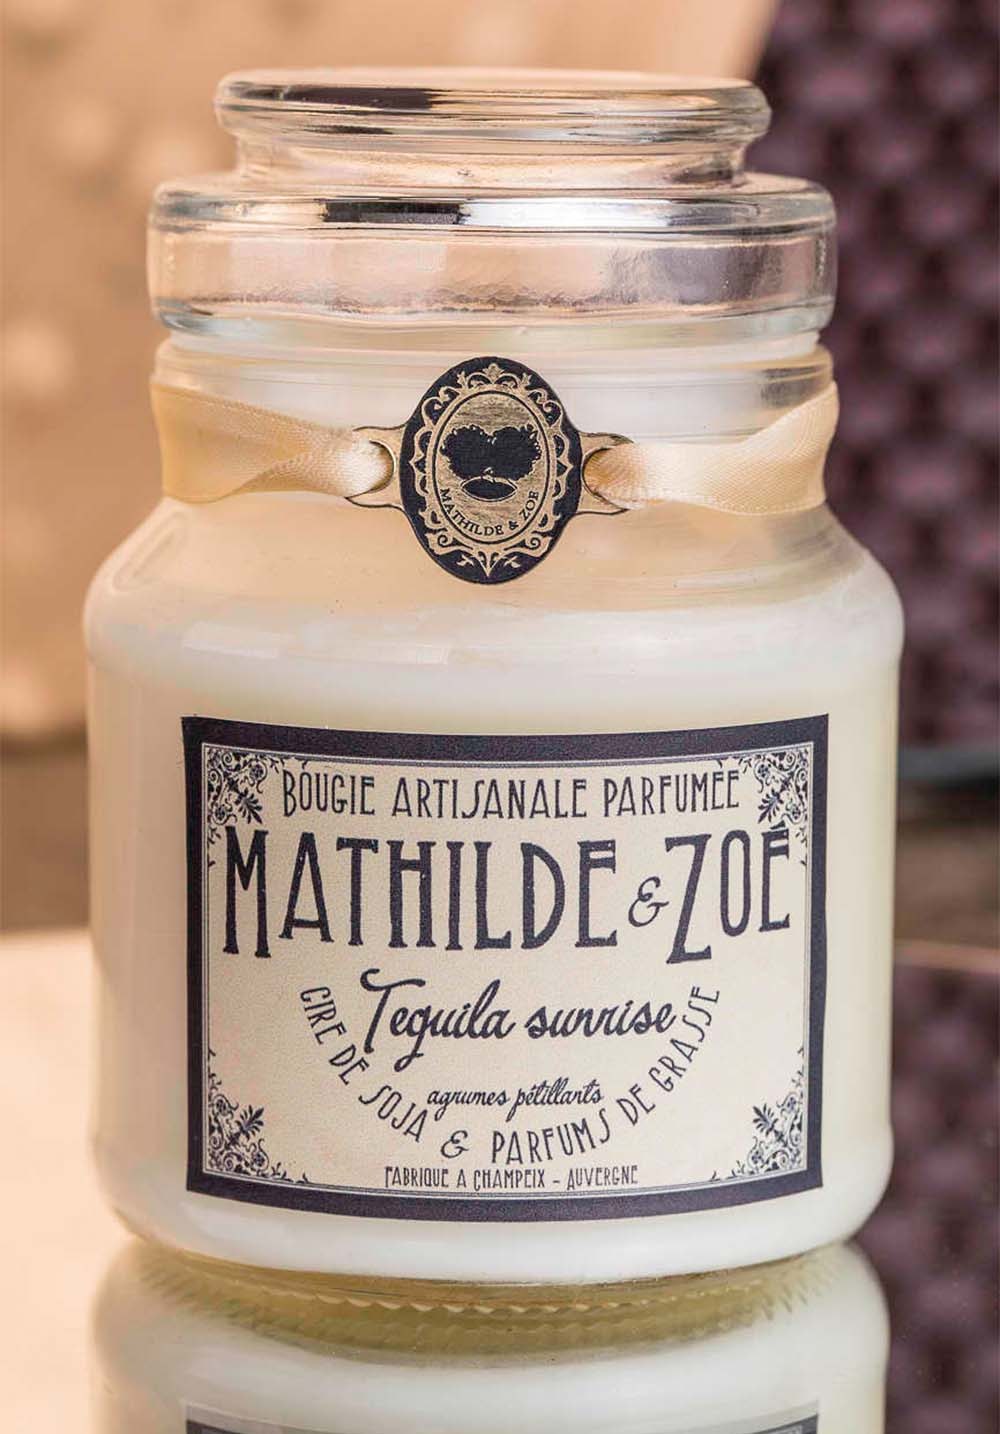 Bougie artisanale parfumée Mathilde et Zoé - Tequila Sunrise